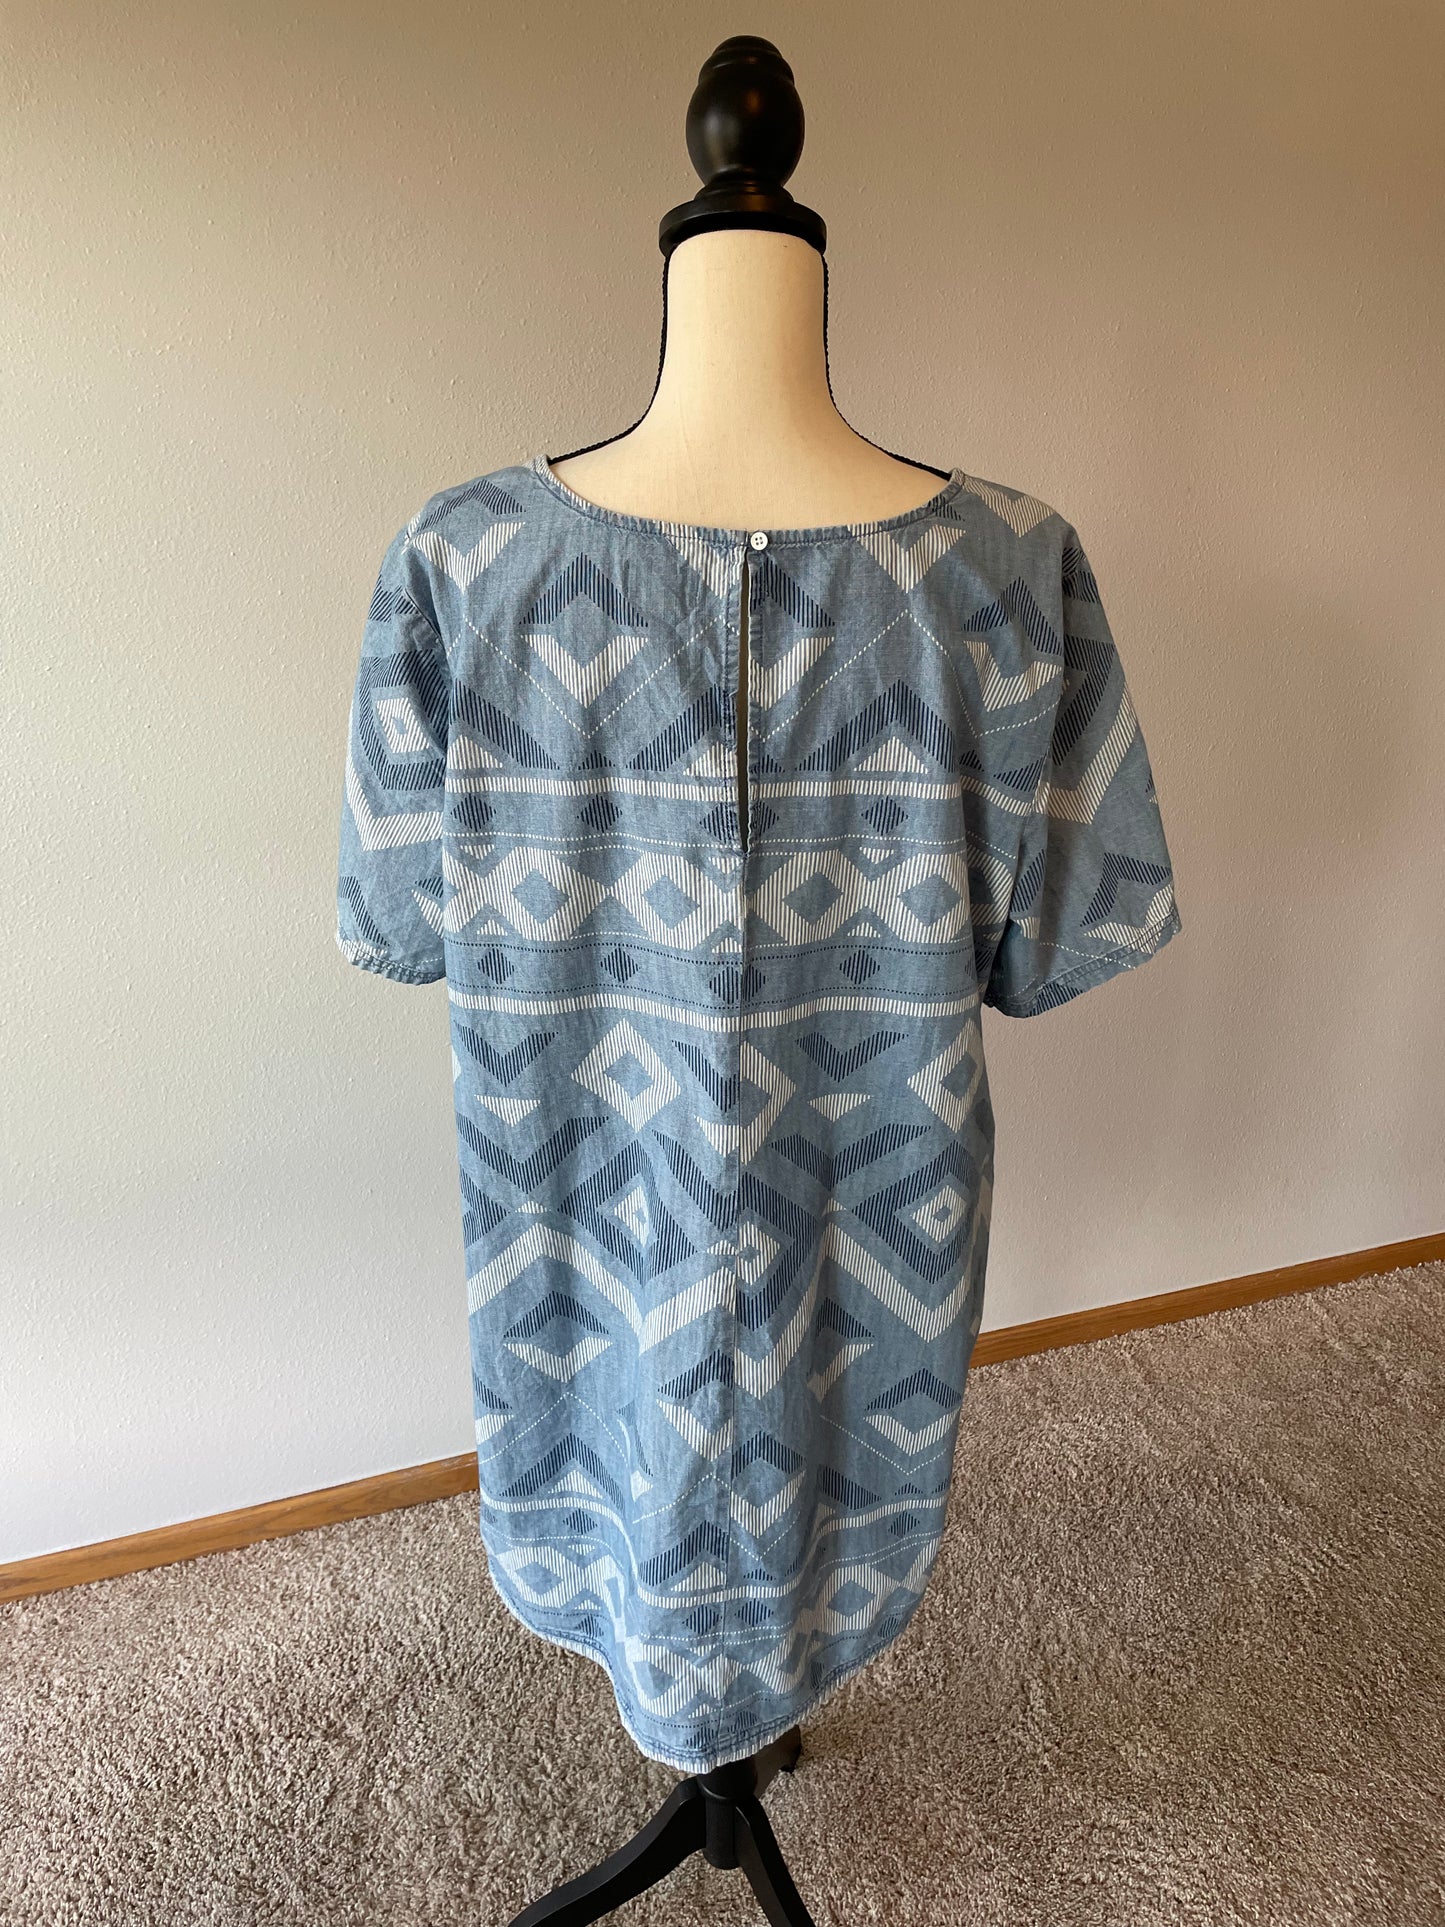 Old Navy Demin Shift Dress with Geometric Print (XL)